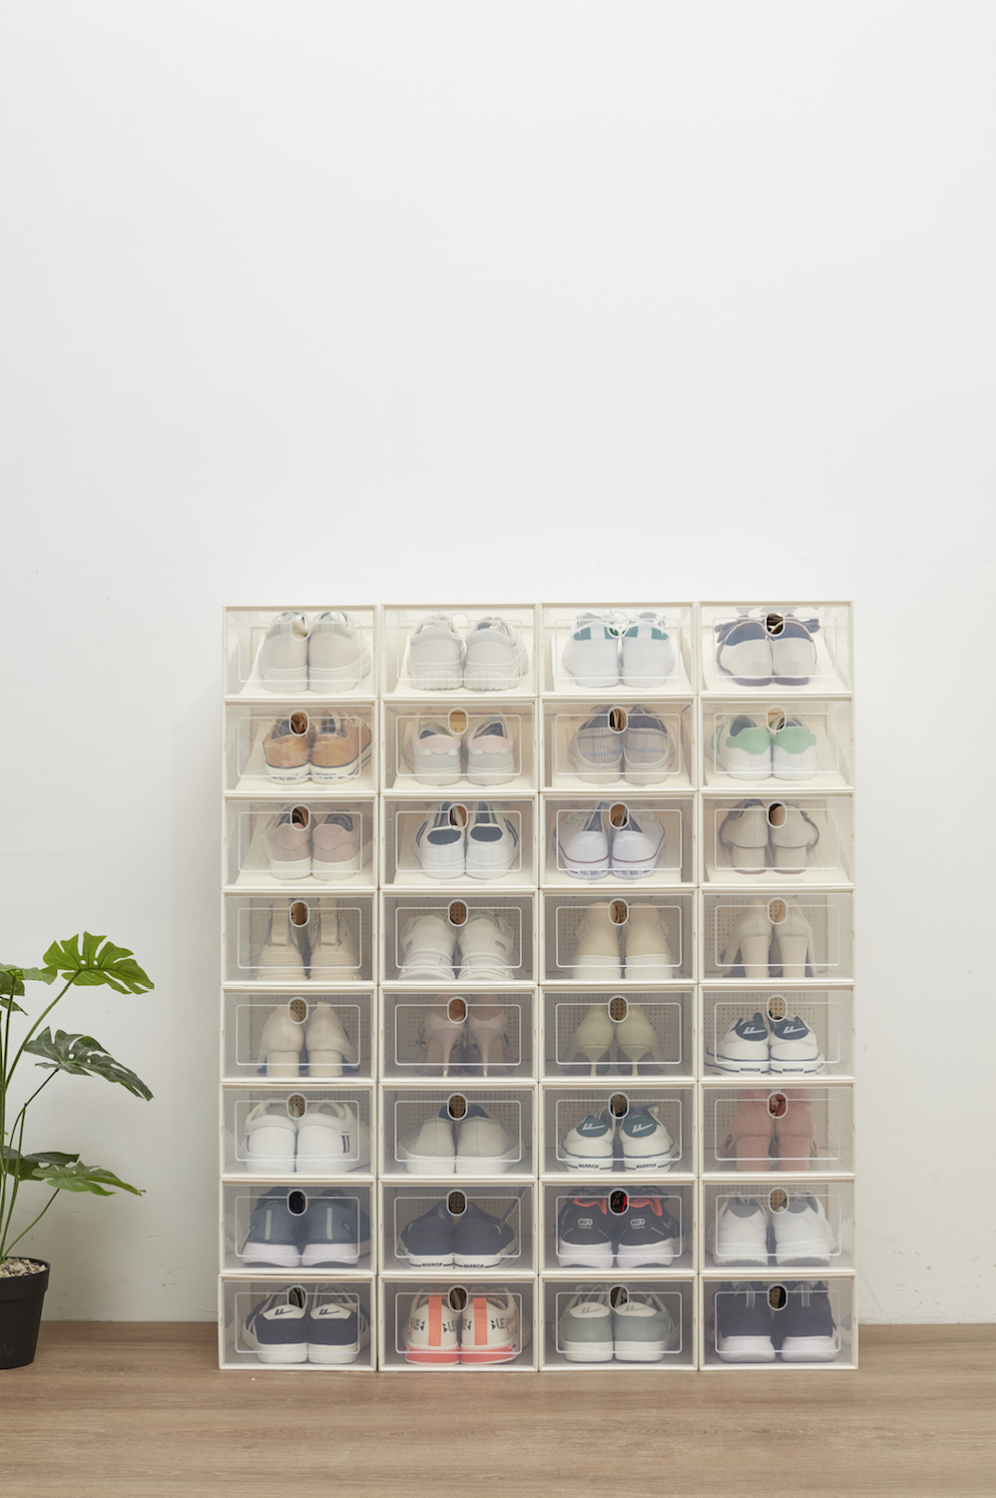  20 cajas de almacenamiento de zapatos, caja de zapatos de  plástico transparente apilable, organizador de zapatos, caja de exhibición  plegable, estante de armario, organizador de zapatos, necesidad de montar  (agujeros redondos